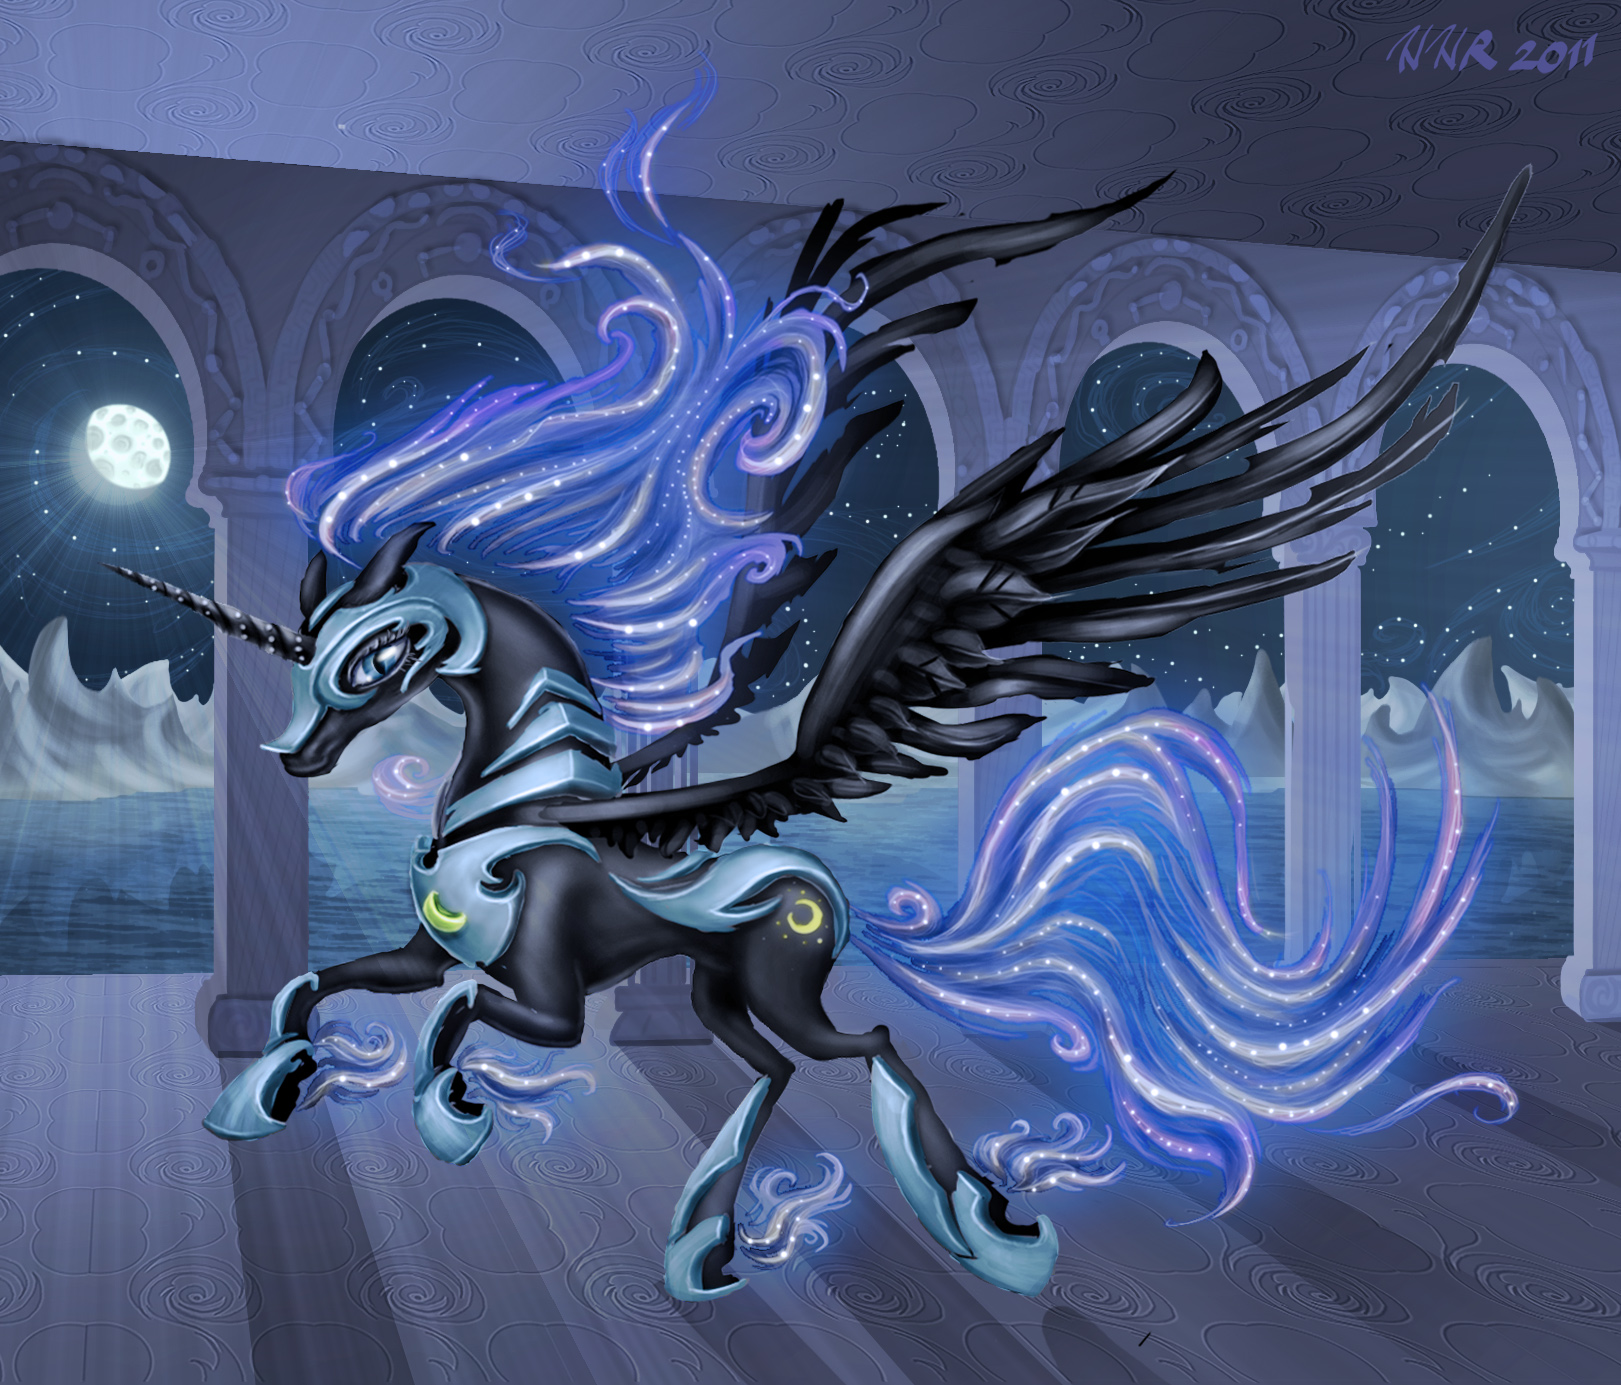 Gallop of Nightmare Moon